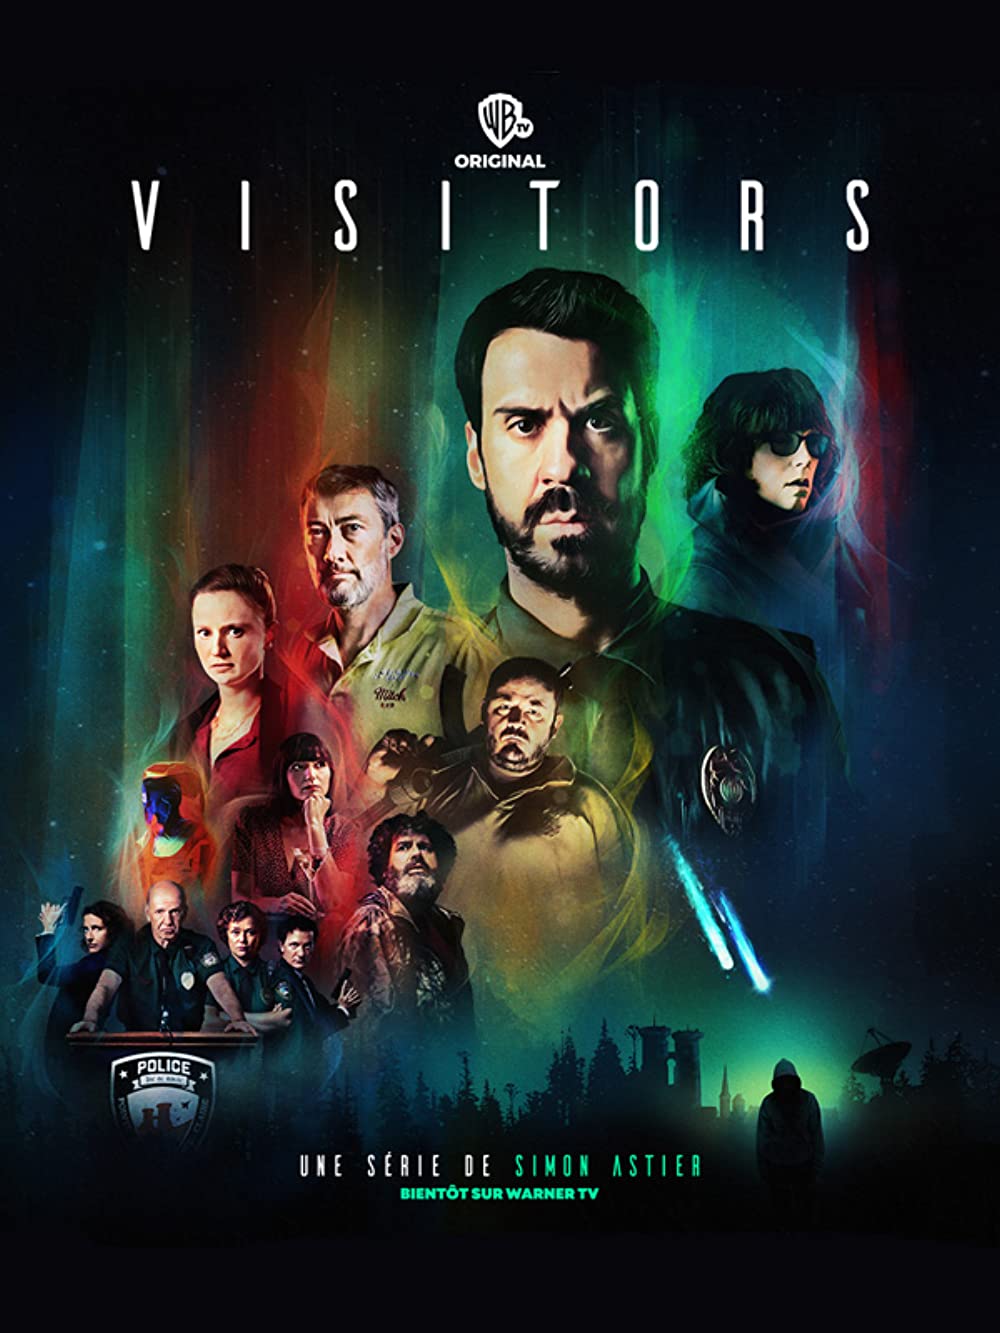 Is “The Visitors Season 1” on Warner TV